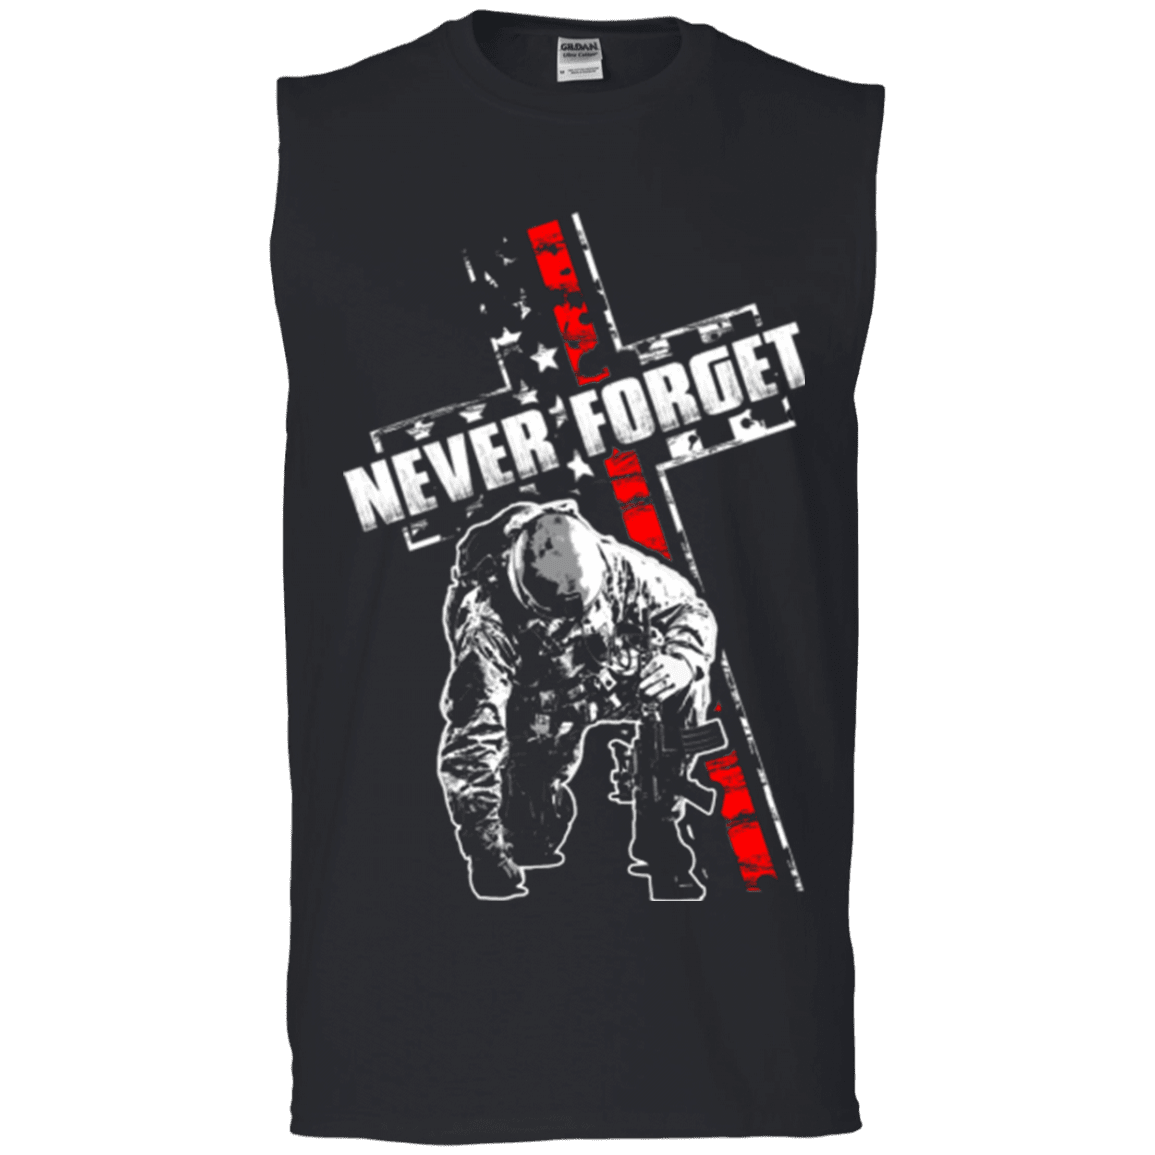 Military T-Shirt "NEVER FORGET VETERAN"-TShirt-General-Veterans Nation